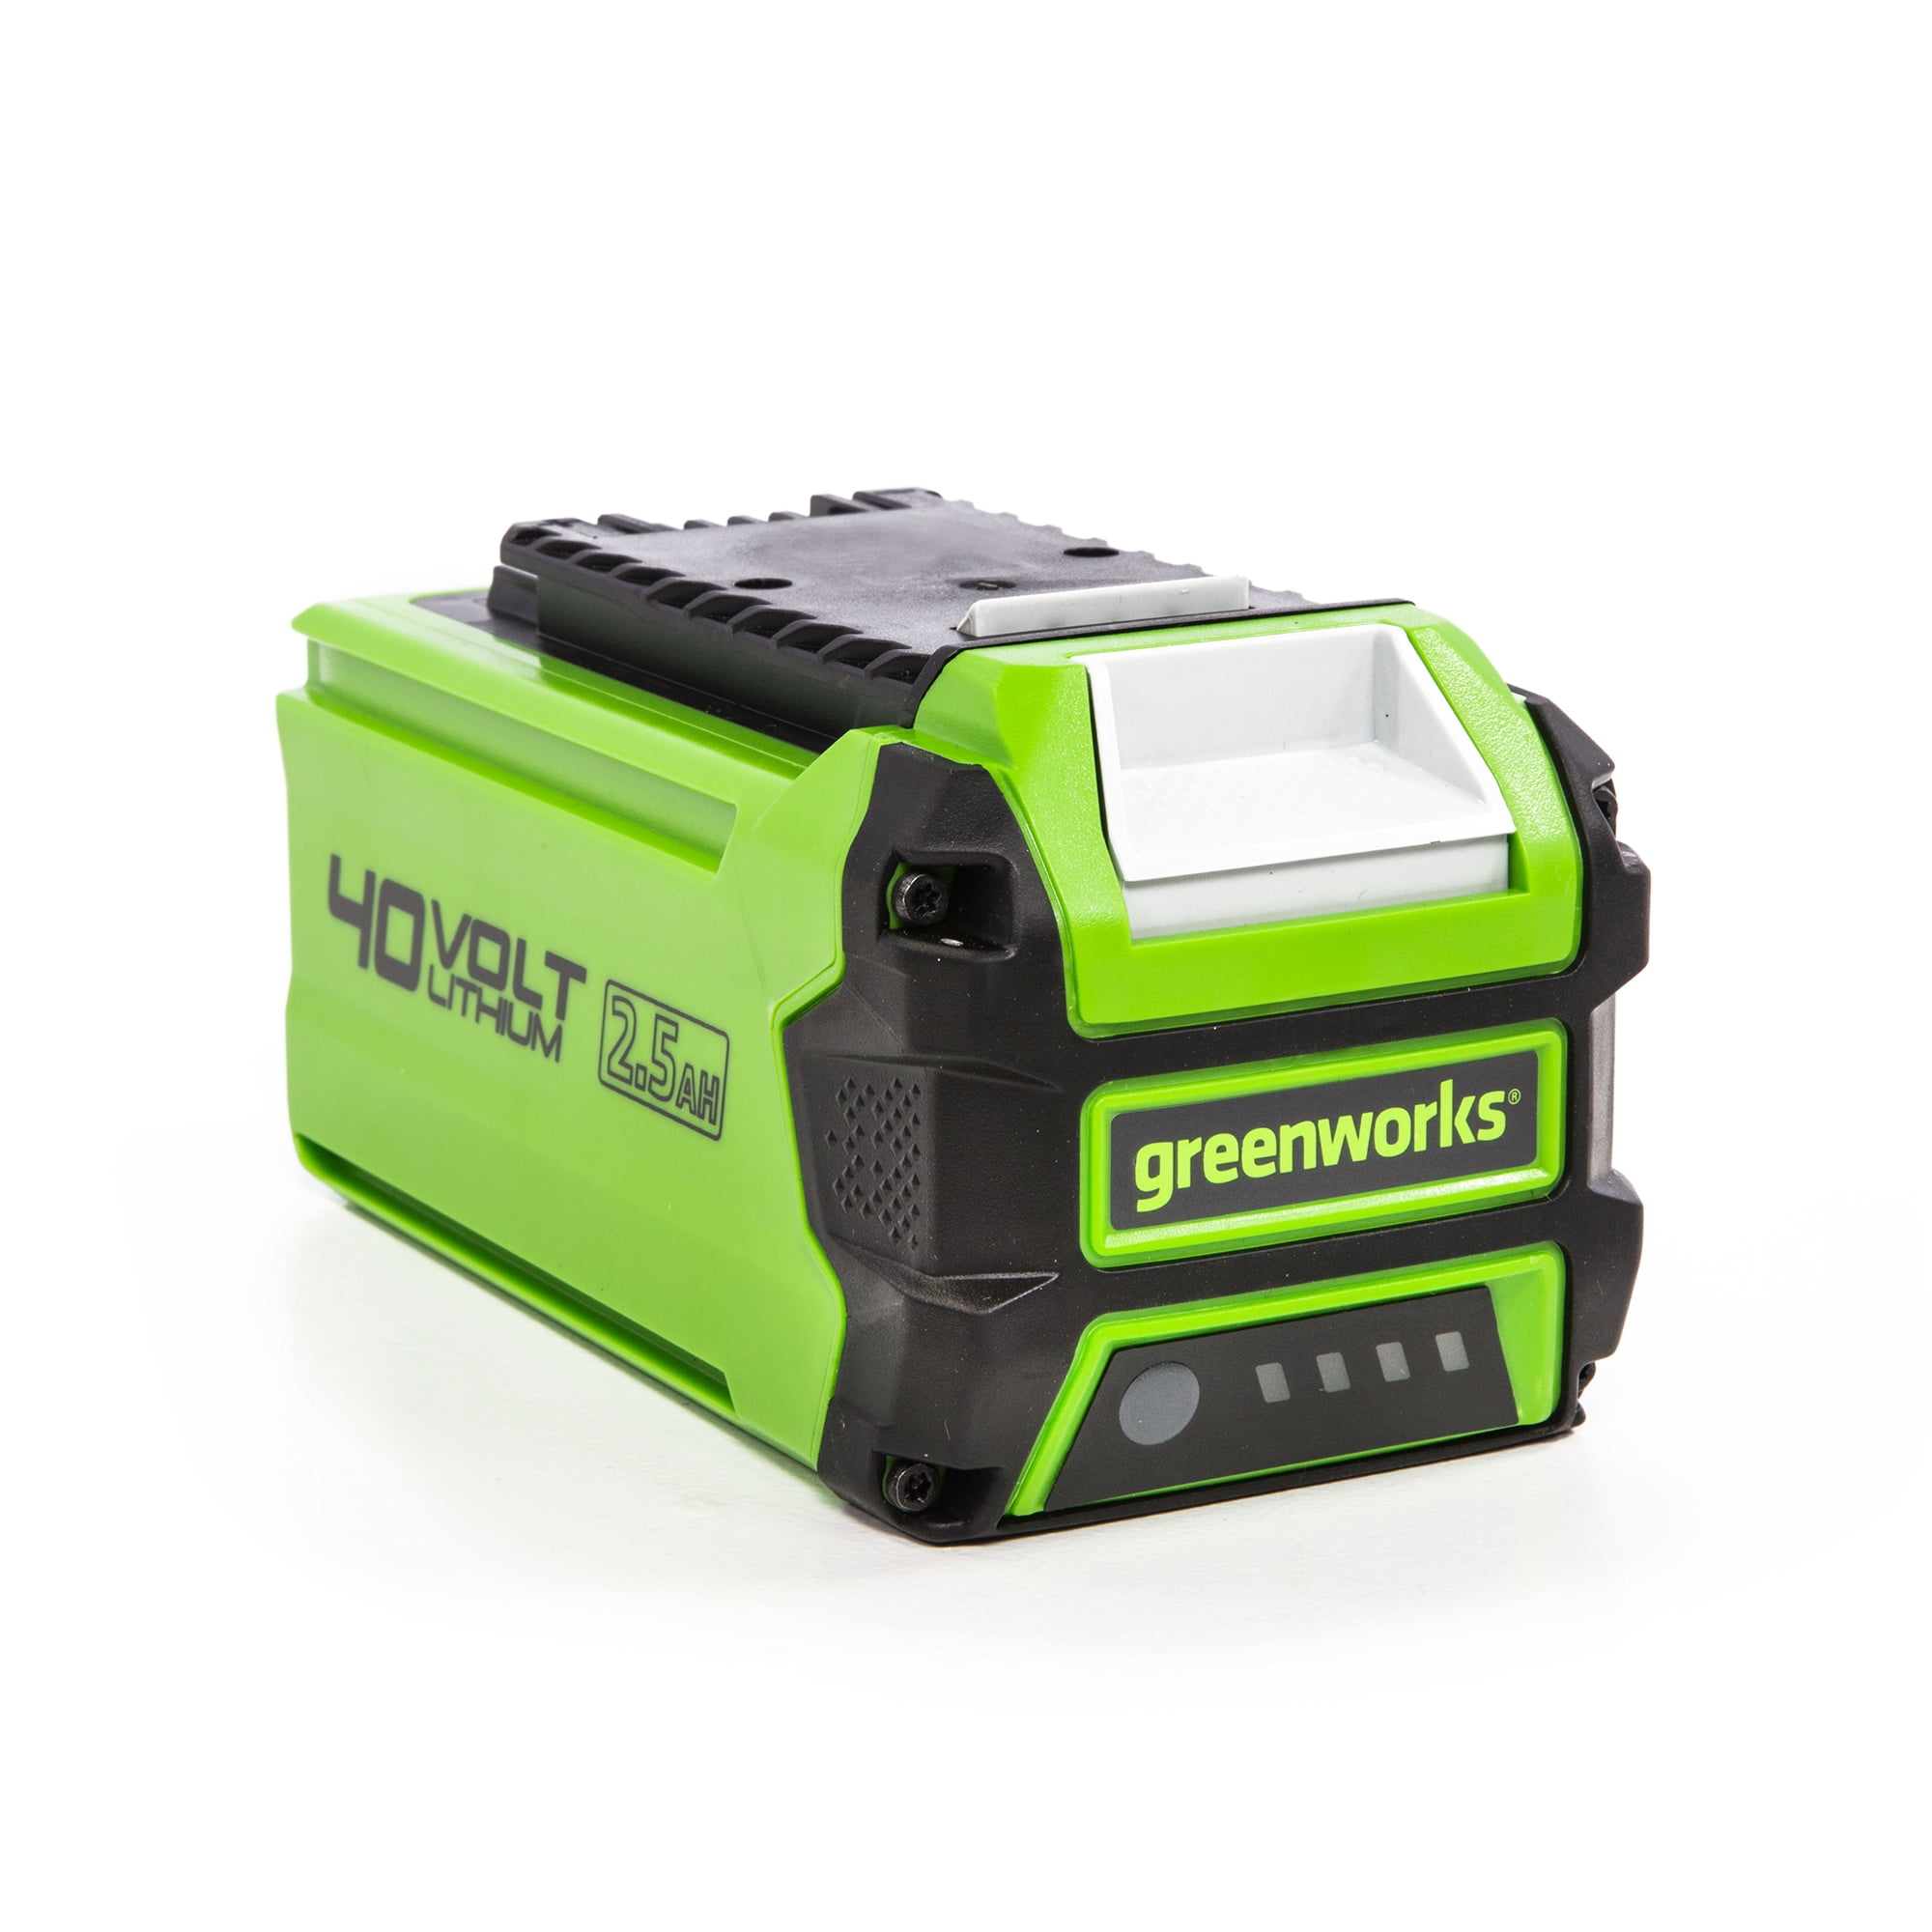 Greenworks 40v 2.5ah Battery 2938402D – Walmart Inventory Checker .